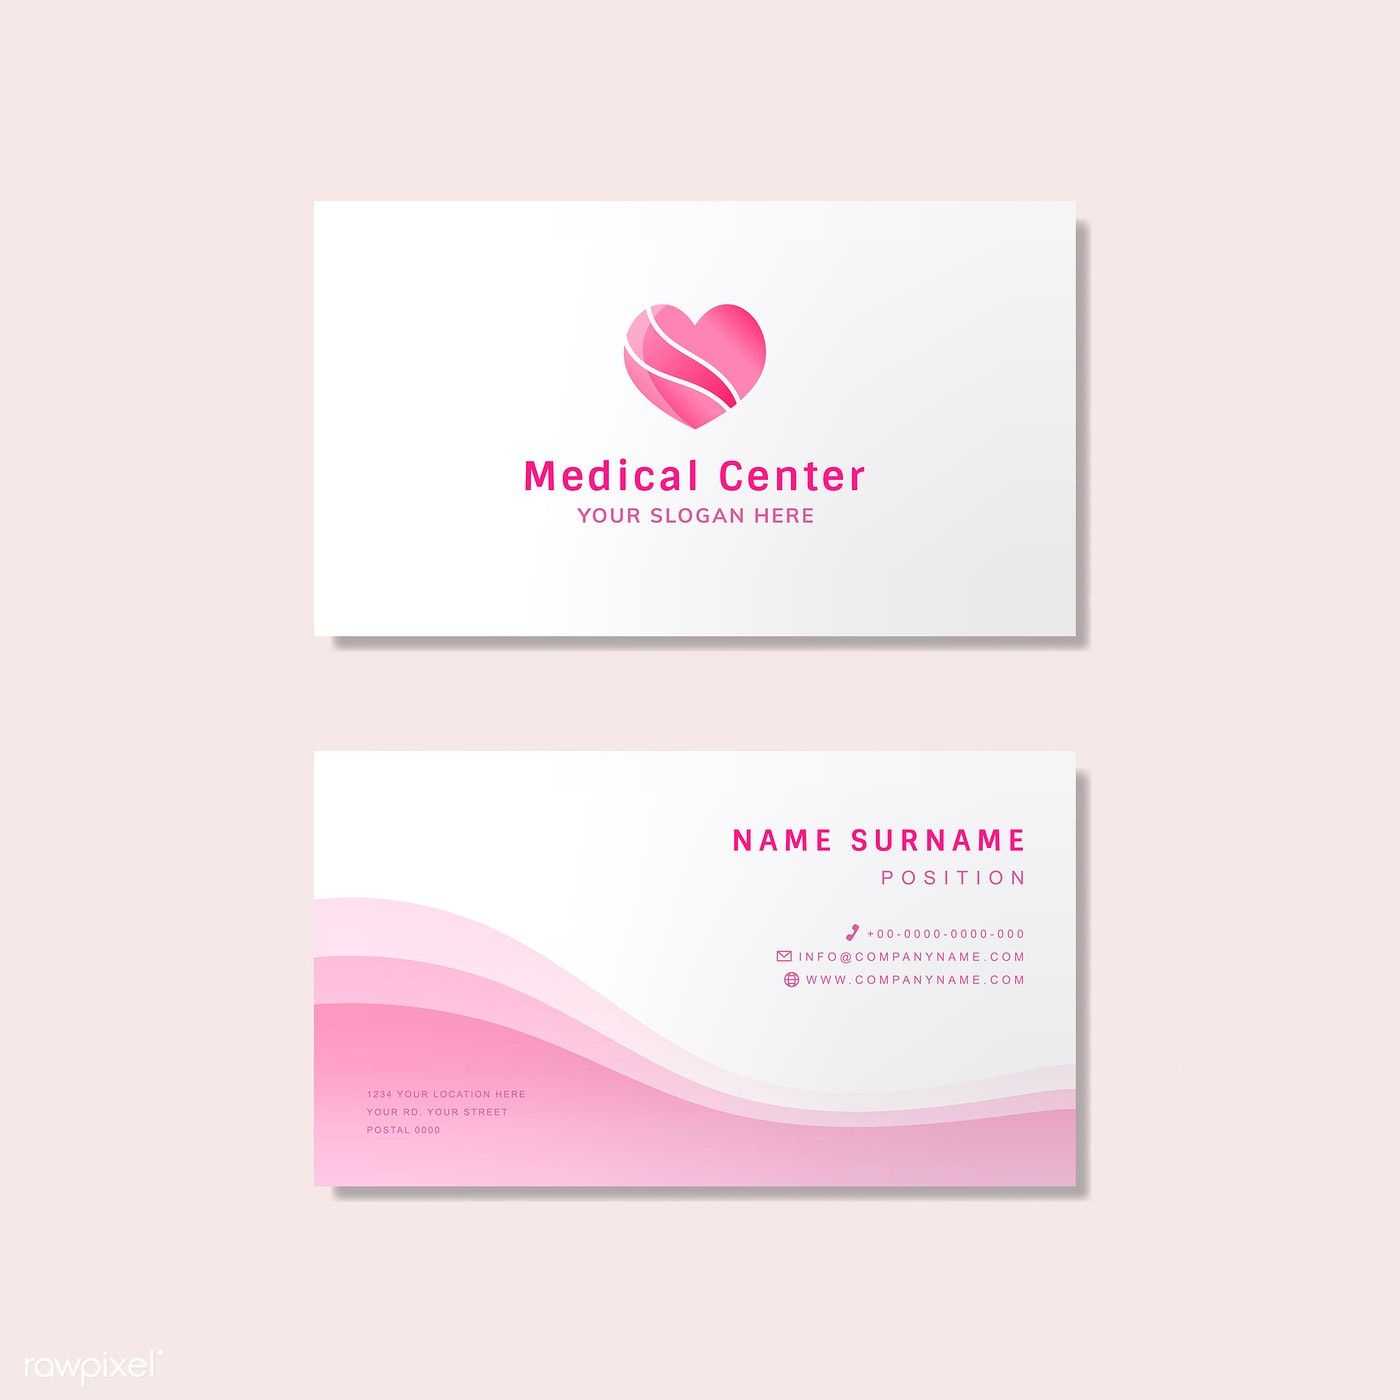 Medical Professional Business Card Design Mockup | Free Within Medical Business Cards Templates Free